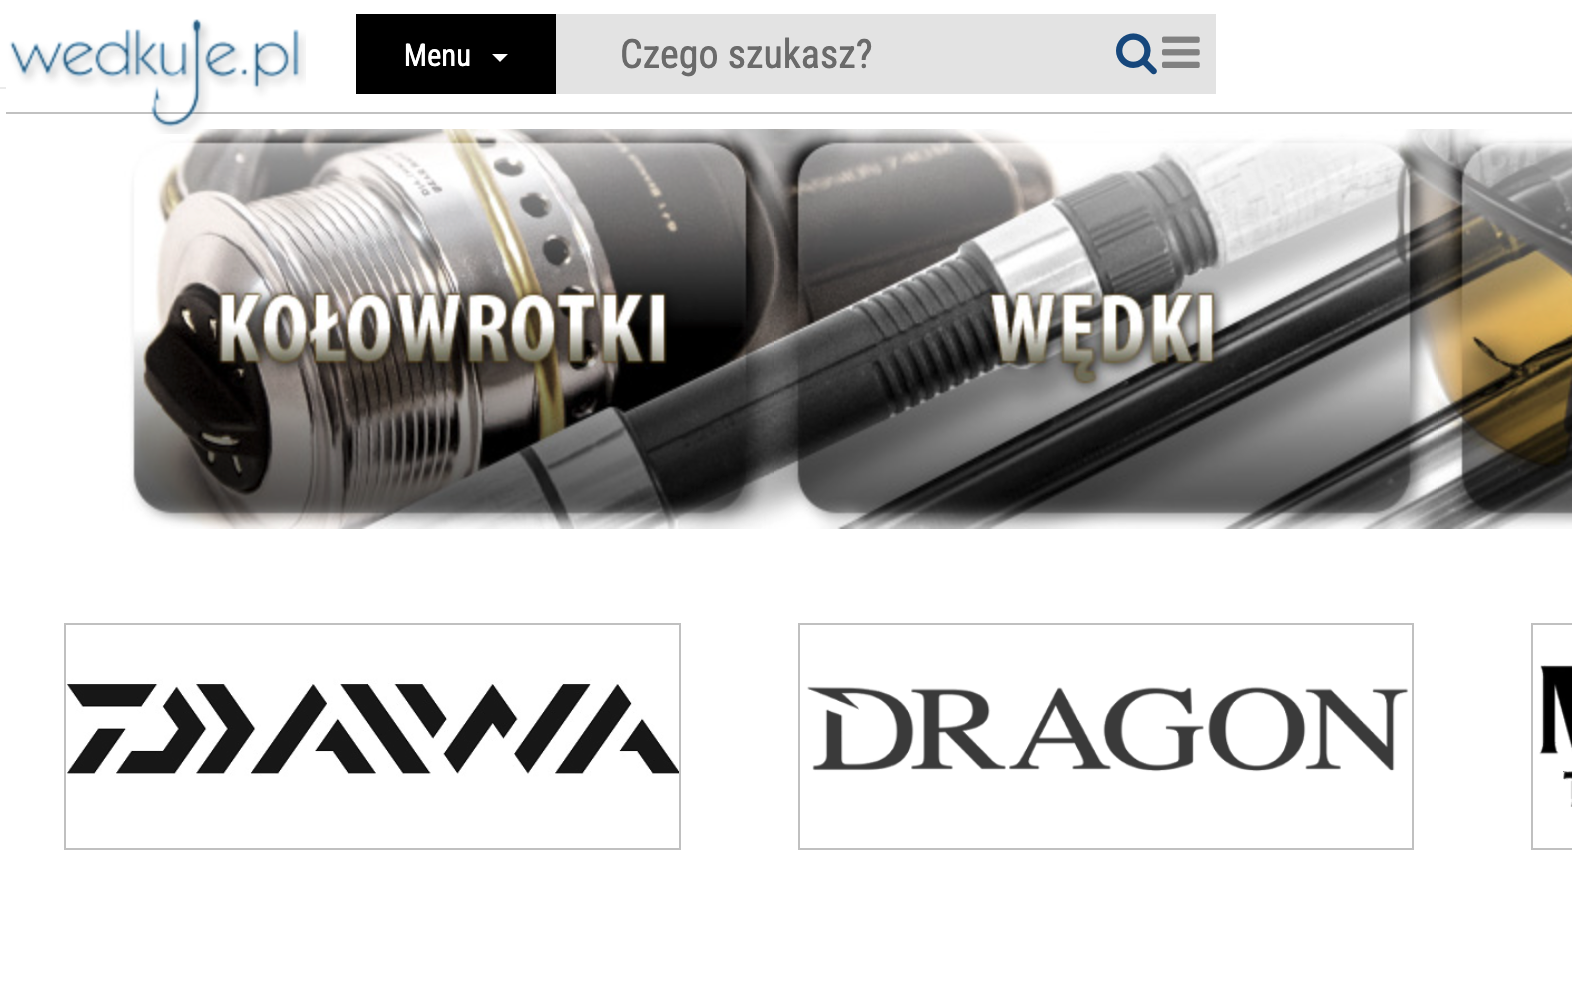 wedkuje.pl: widok sklepu internetowego